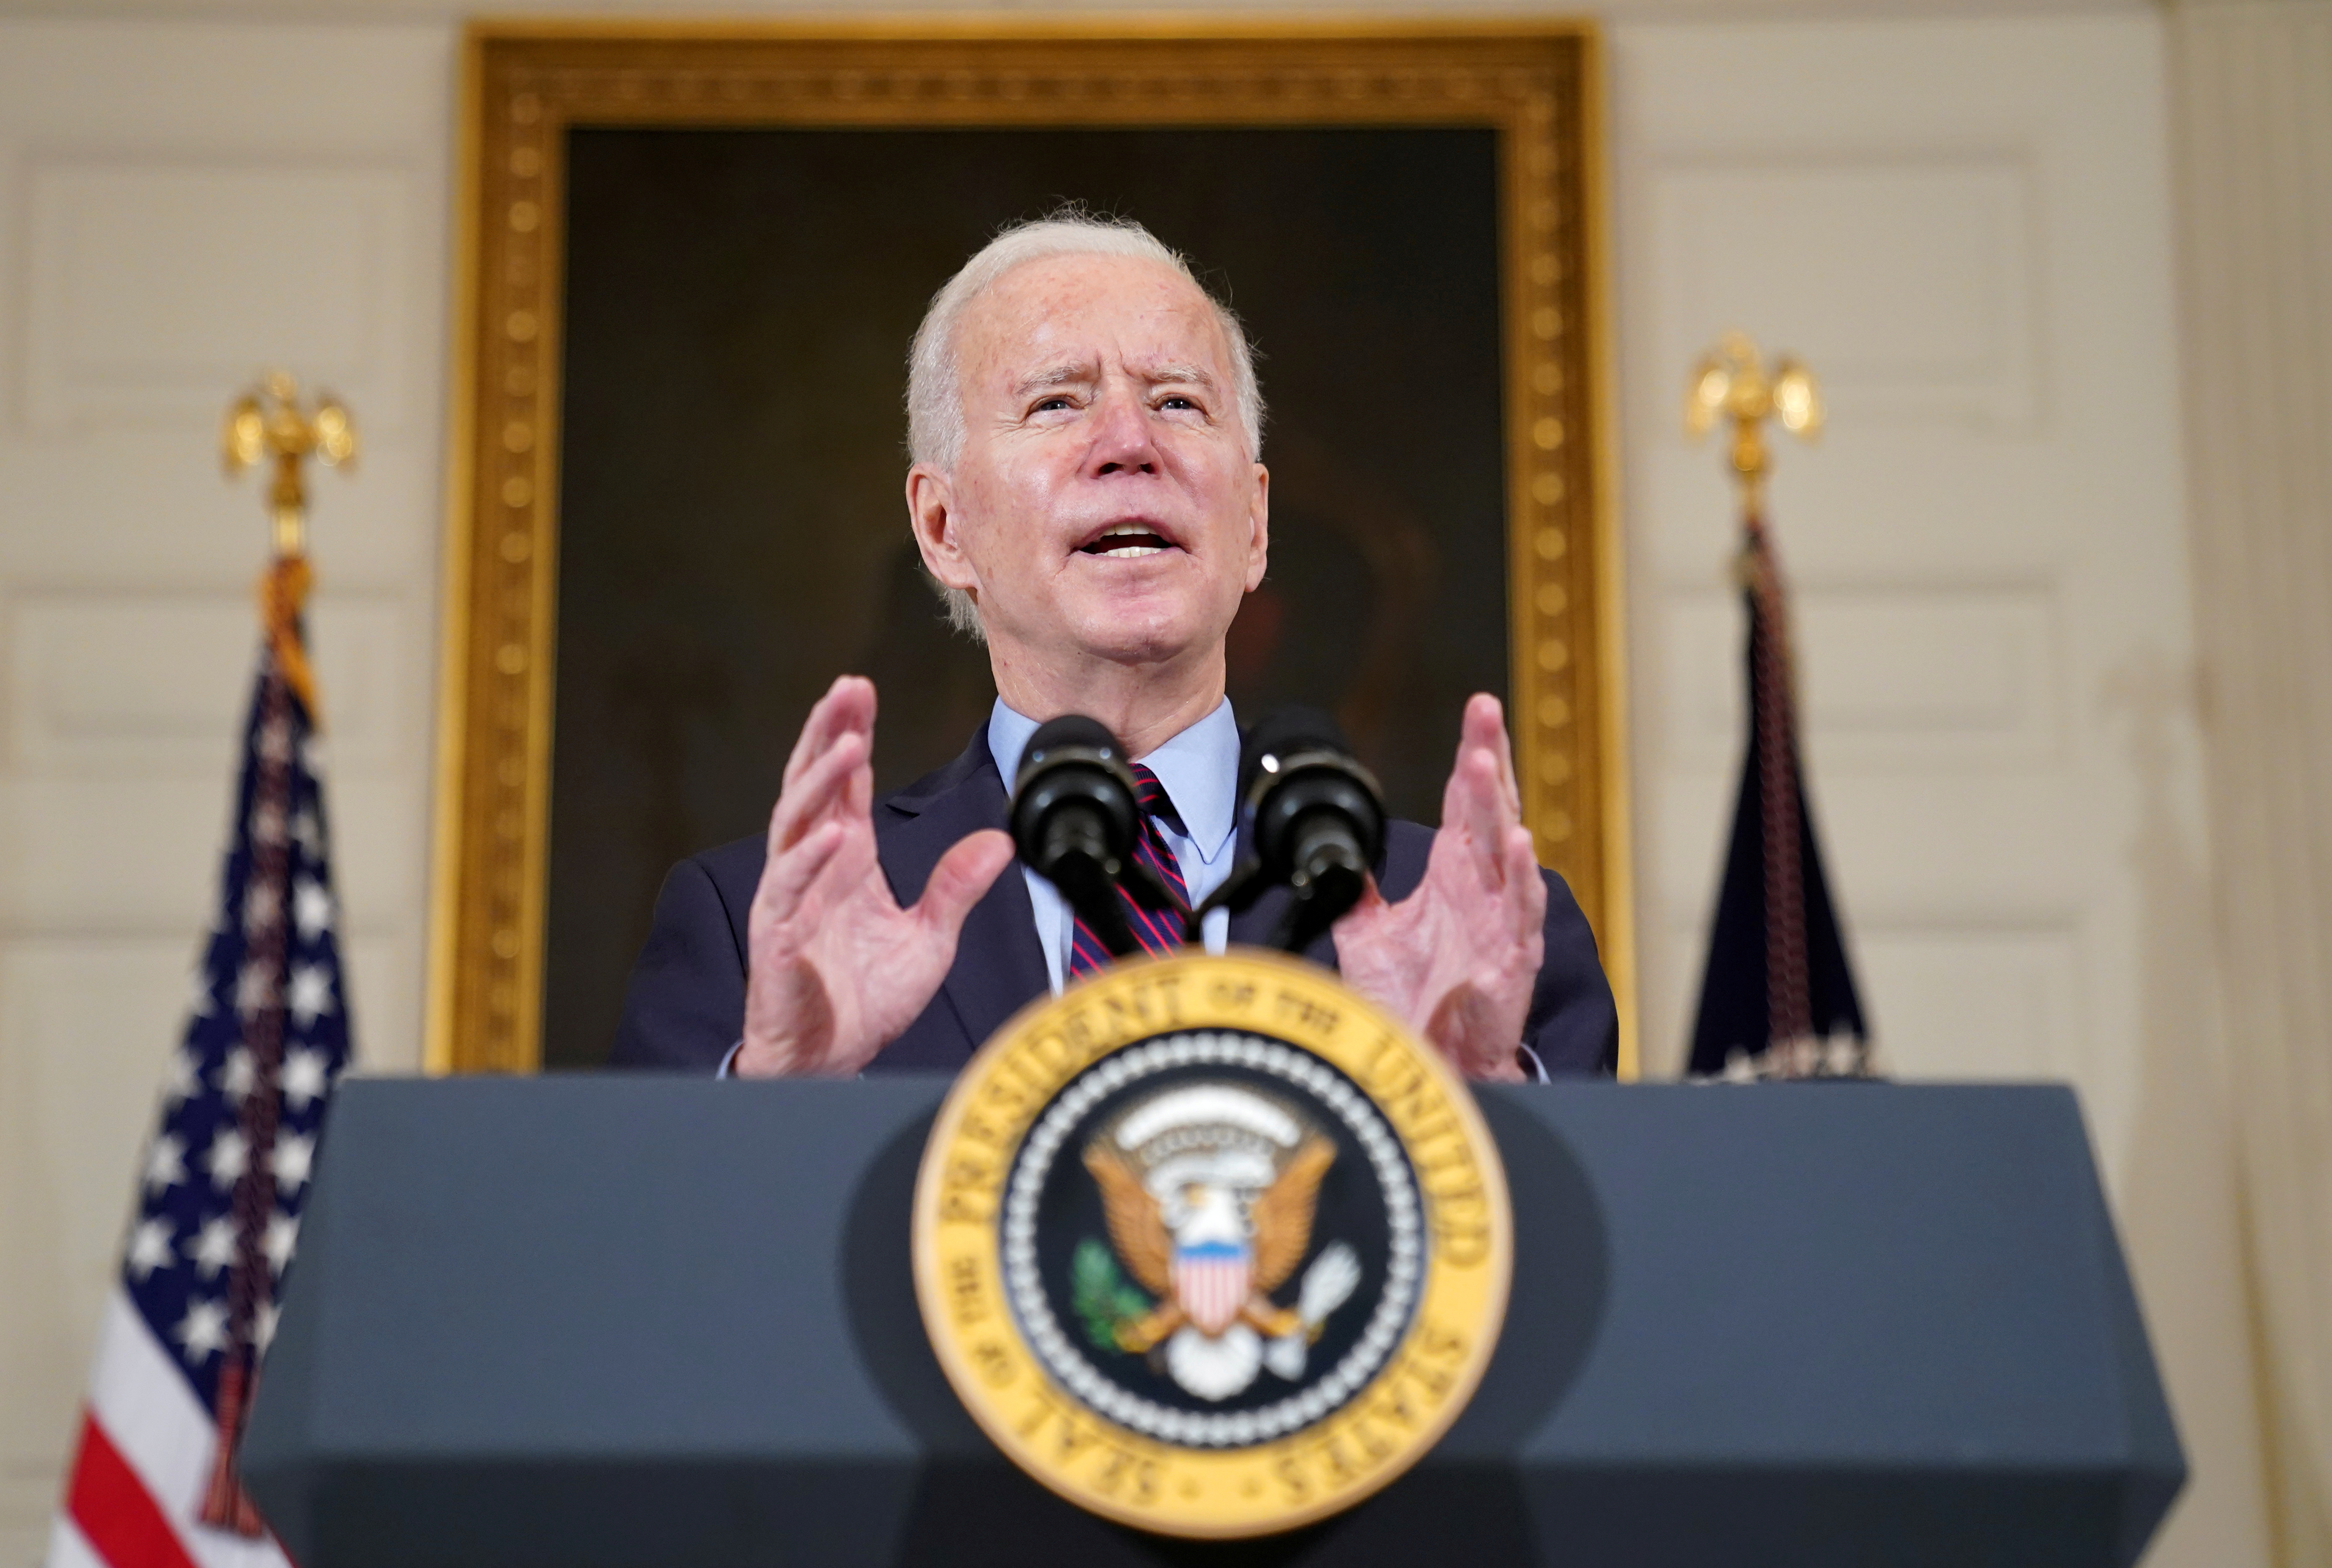 U.S. President Biden speaks about the economy and need to pass coronavirus aid legislation at the White House in Washington